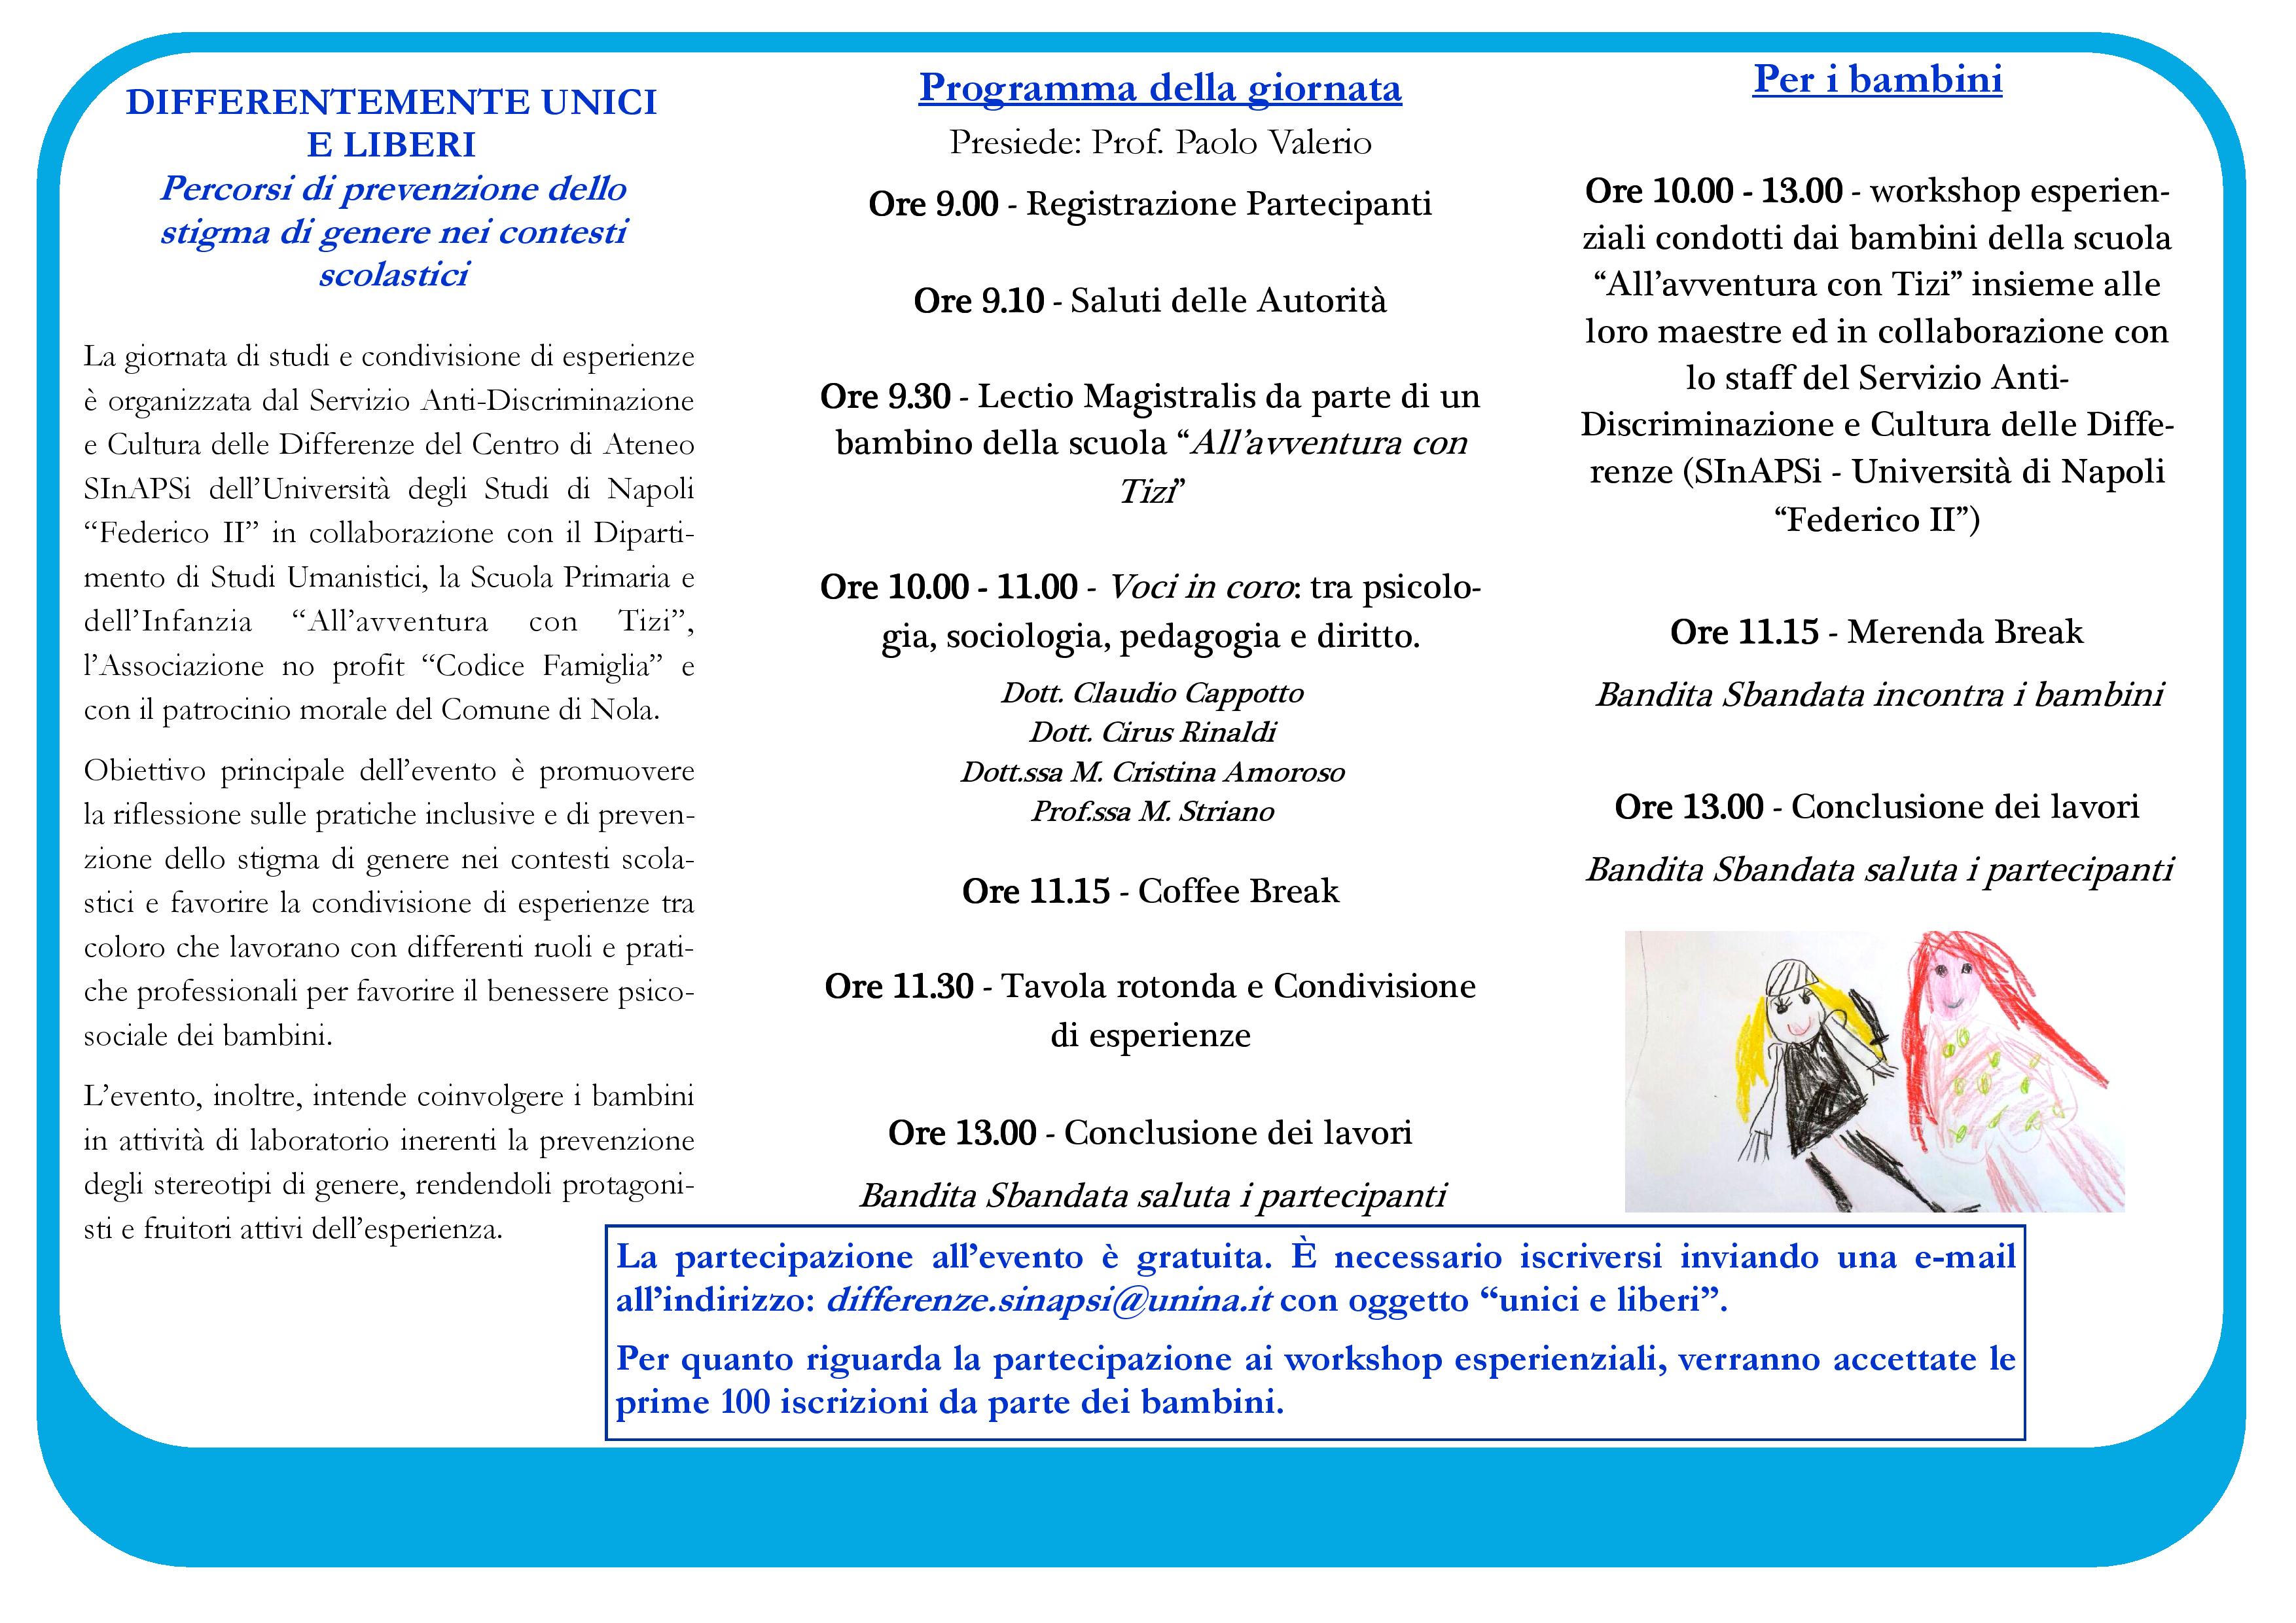 brochure_unici_e_liberi finale-page-002